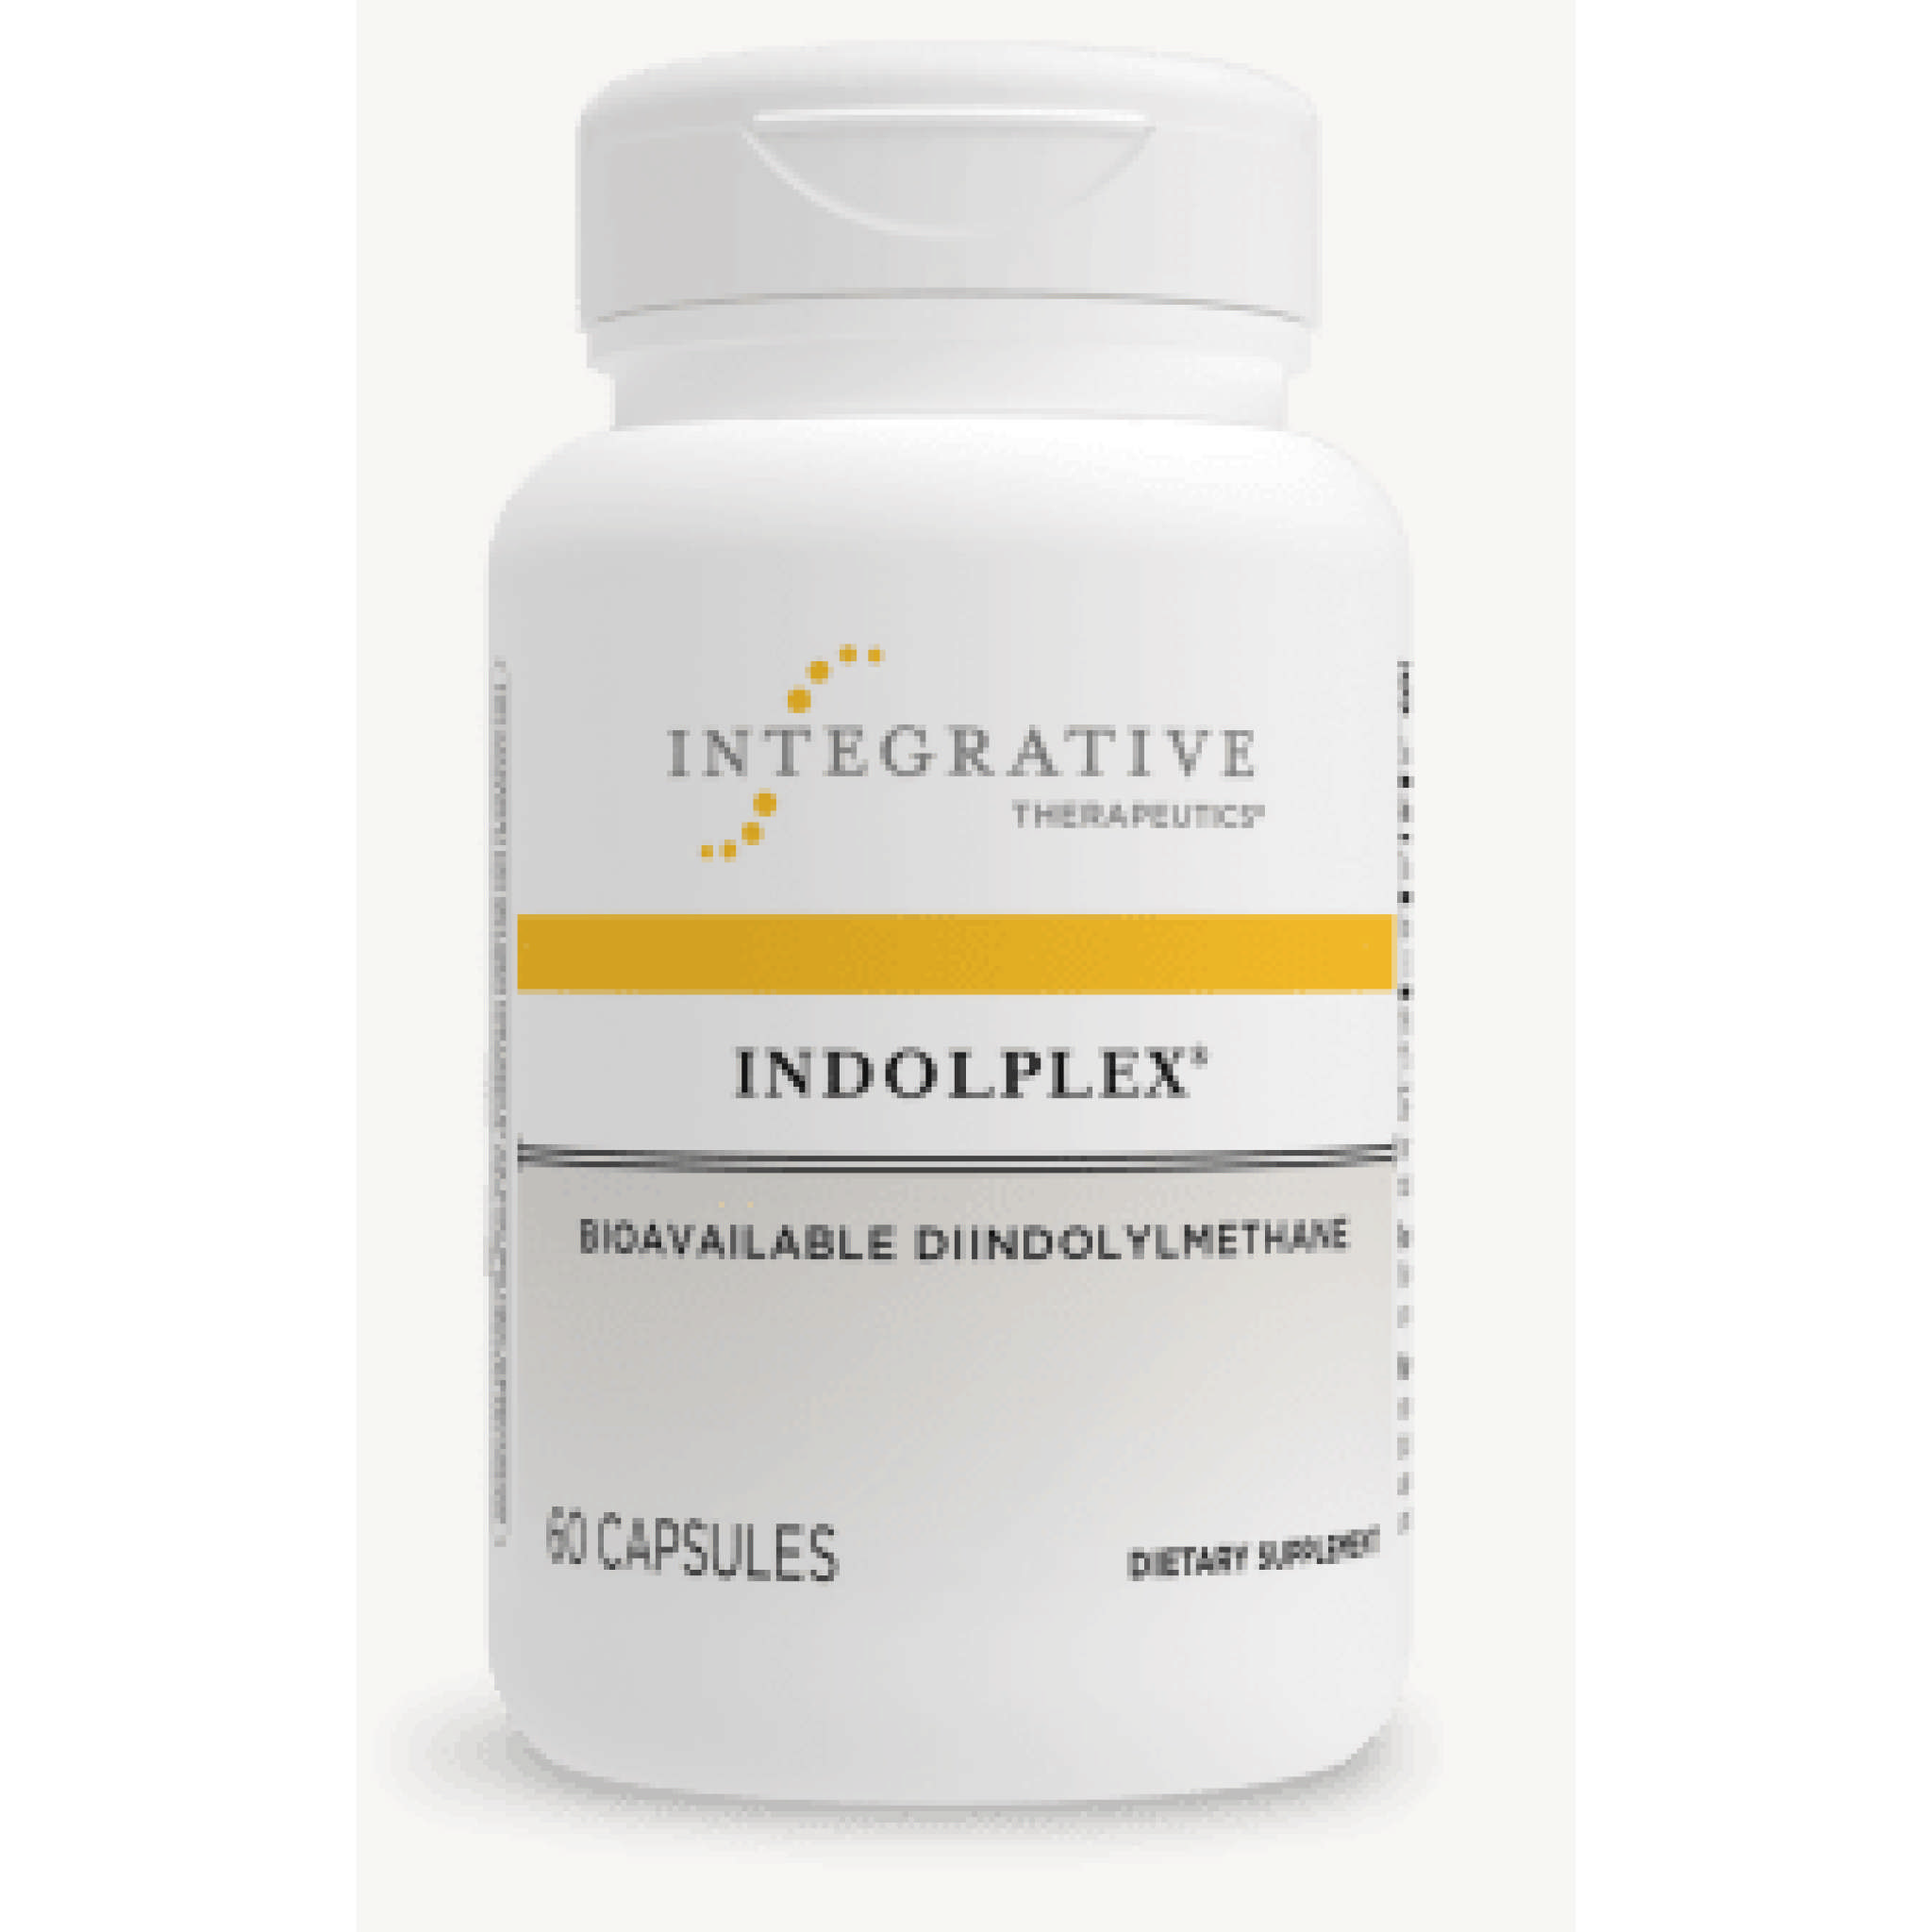 Integrative Therapy - Indolplex